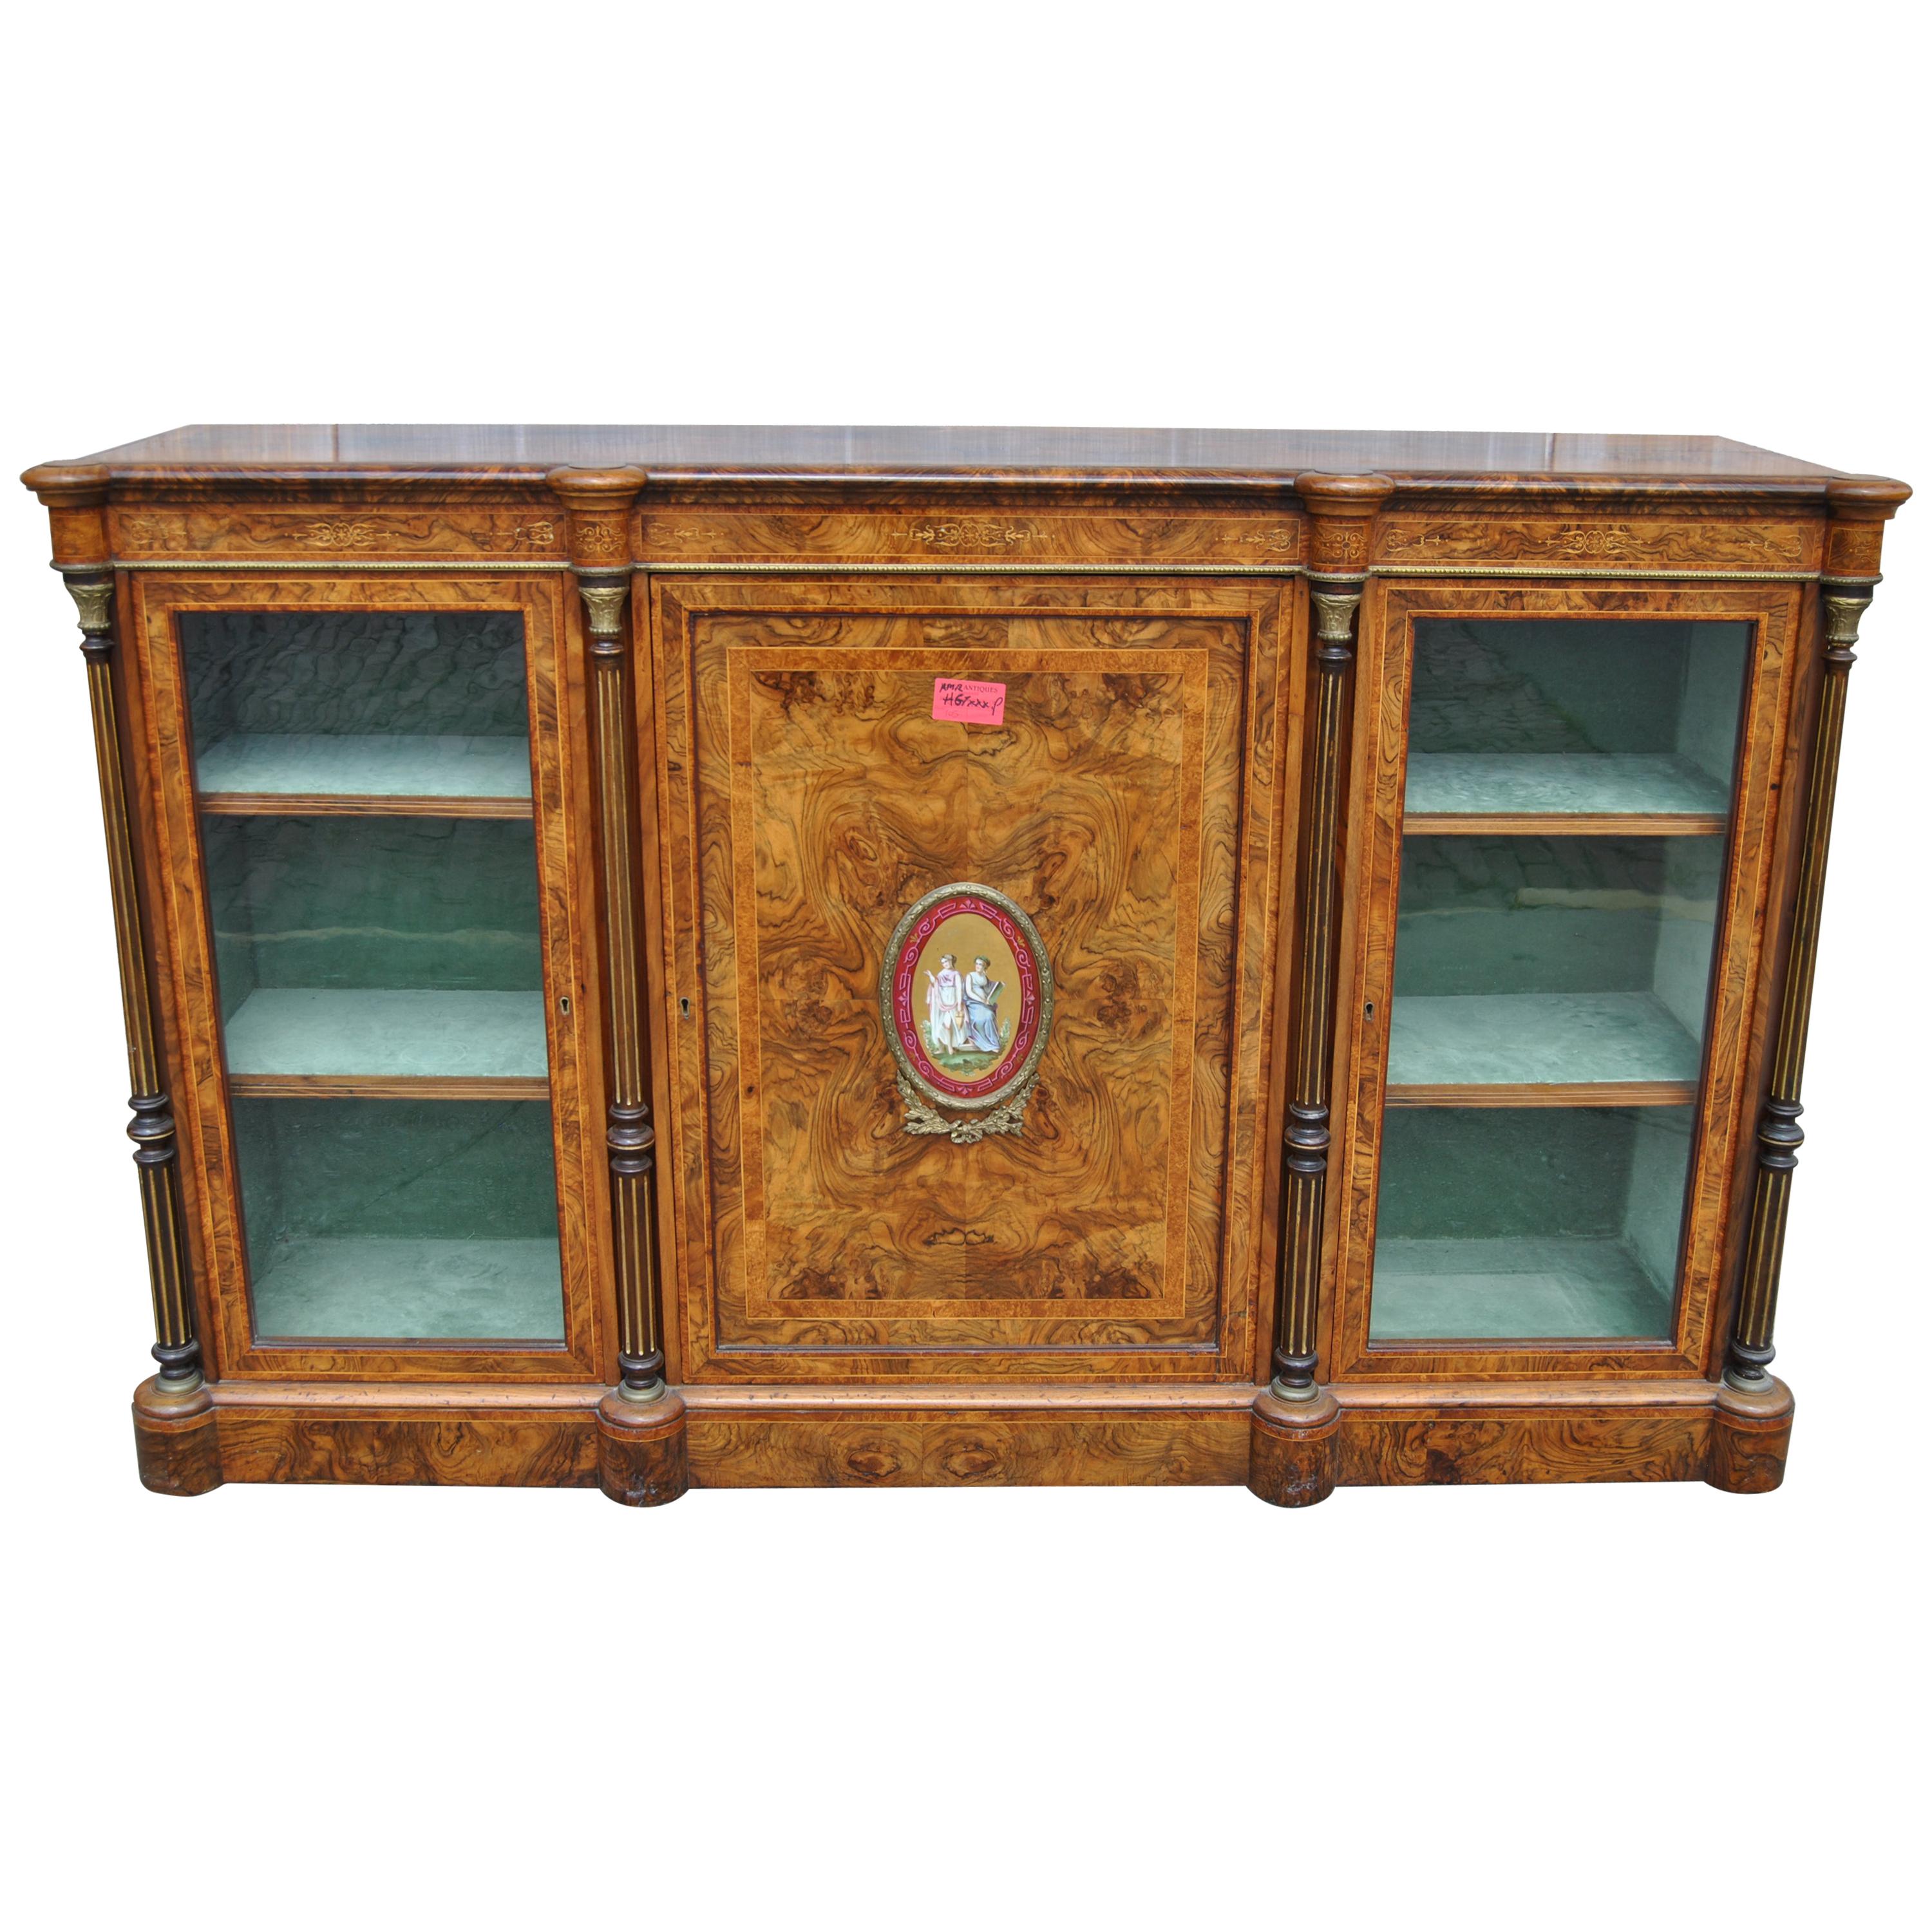 19th Century English Walnut and Burr Walnut Credenza / Server / Display Cabinet